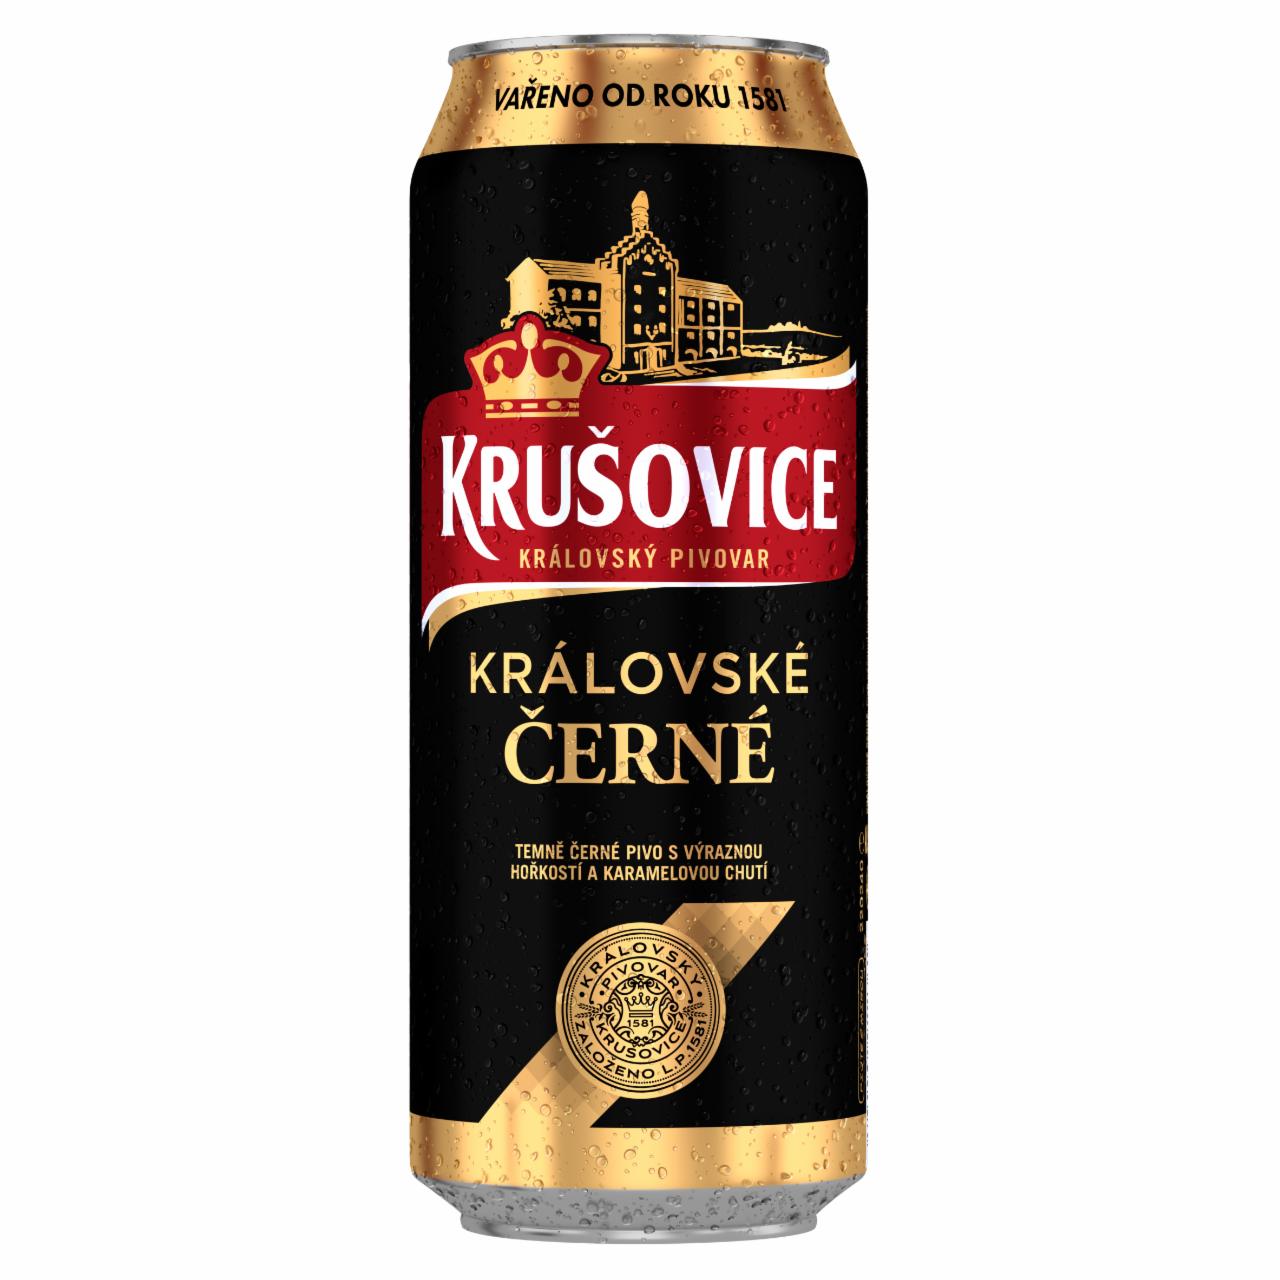 Képek - Krušovice eredeti cseh import barna sör 3,8% 0,5 l doboz